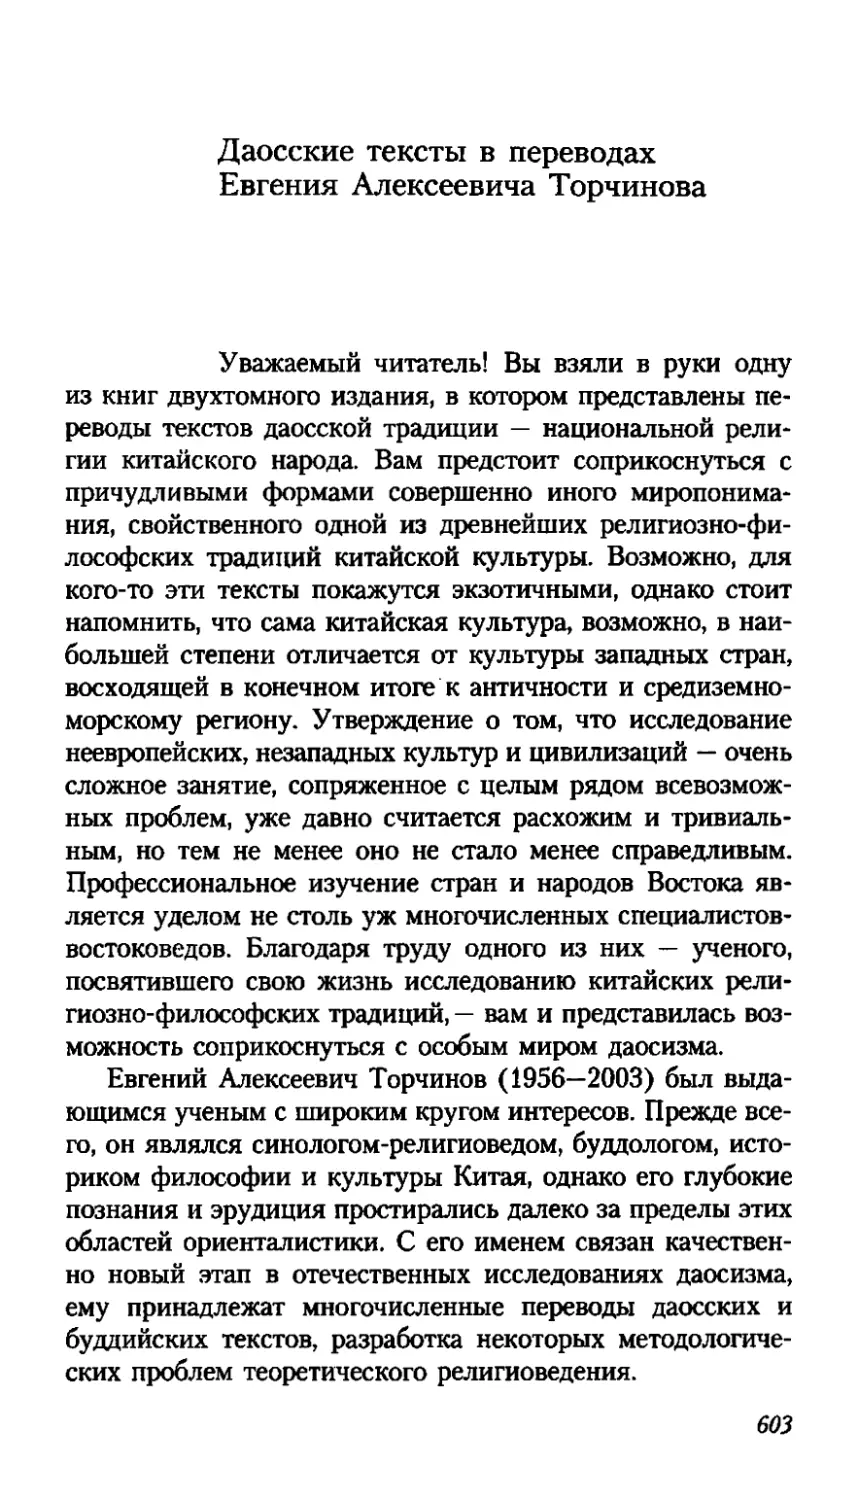 Даосские тексты в переводах Евгения Алексеевича Торчинова. Е.A.Кий